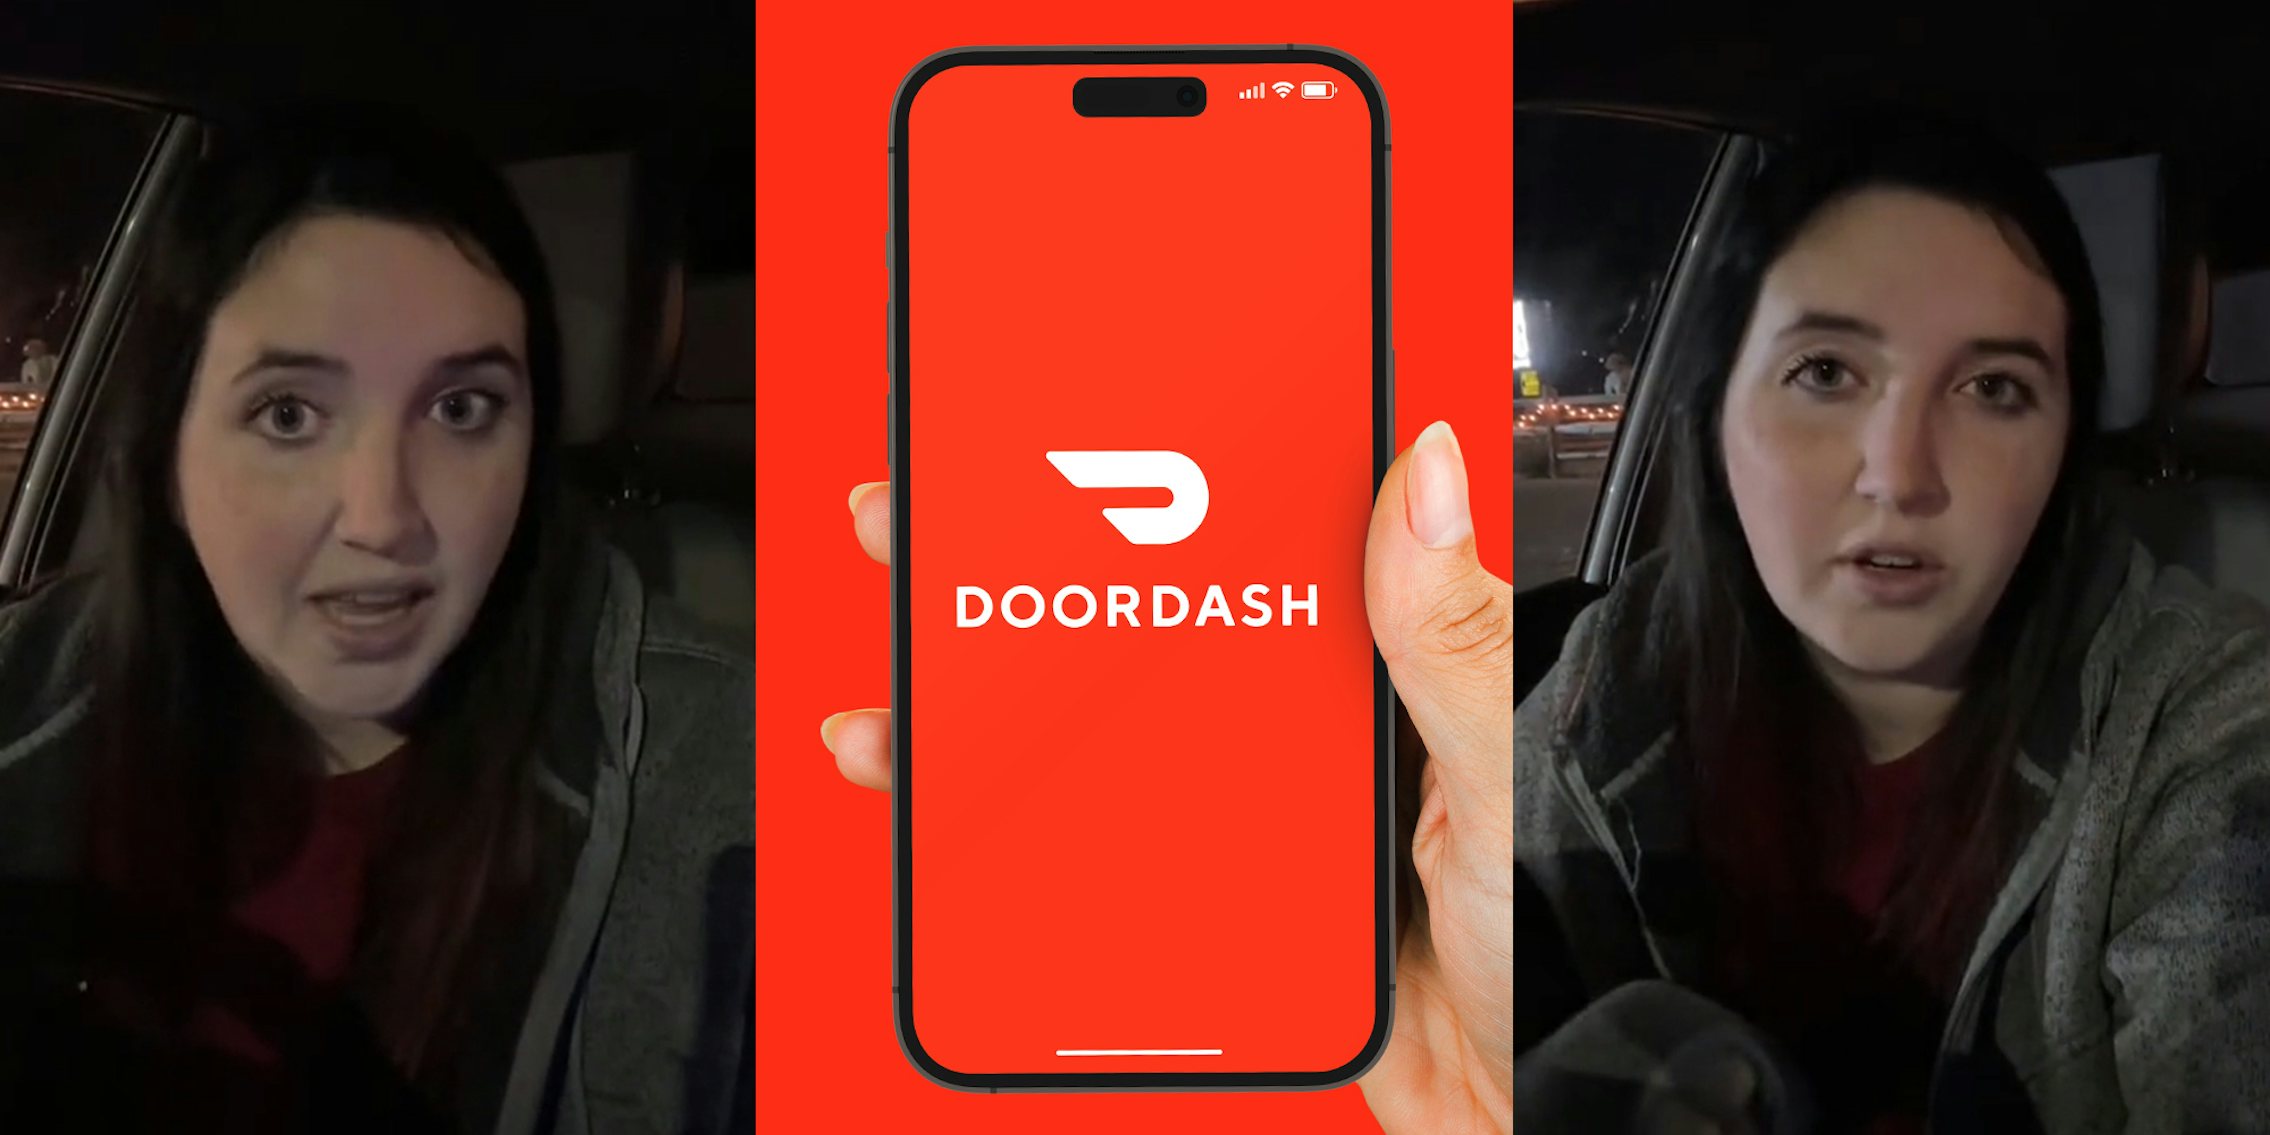 DoorDash employee speaking in car (l) Doordash on phone in hand in front of red background (c) DoorDash employee speaking in car (r)